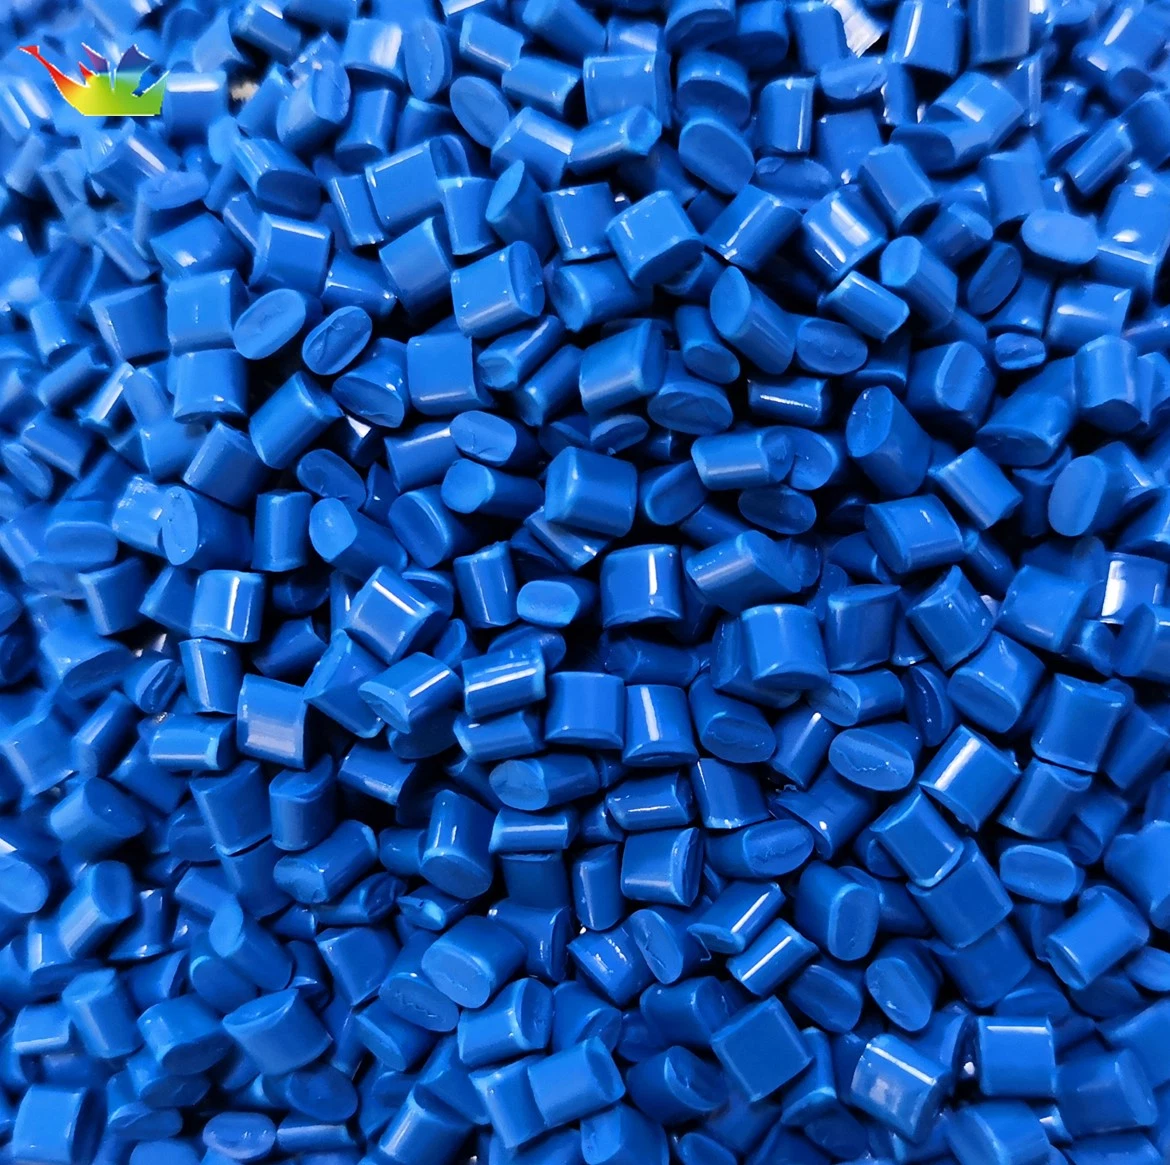 PP, ABS, PE, Pet, as, PC, Masterbatch Azul de Material Plástico para Eletrodomésticos/Tubos.